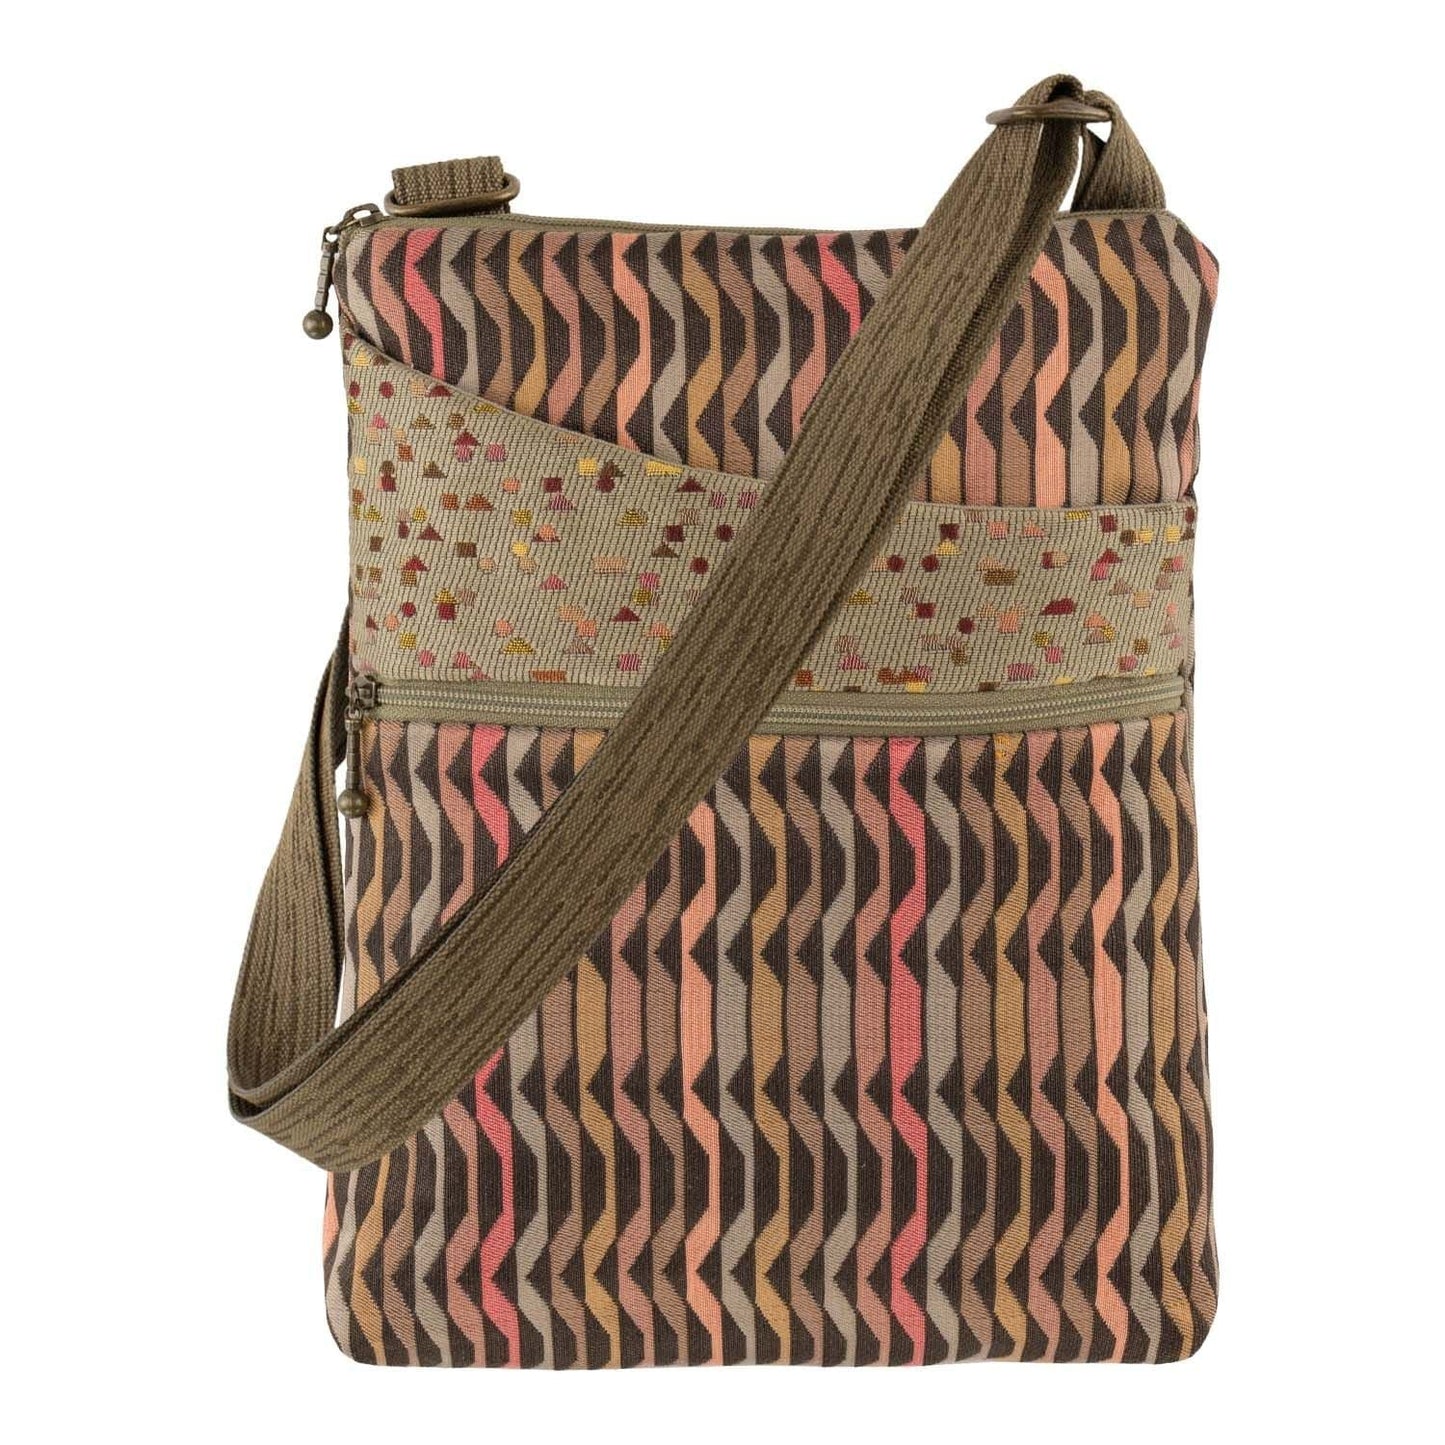 BAG Pocket Bag in Kites